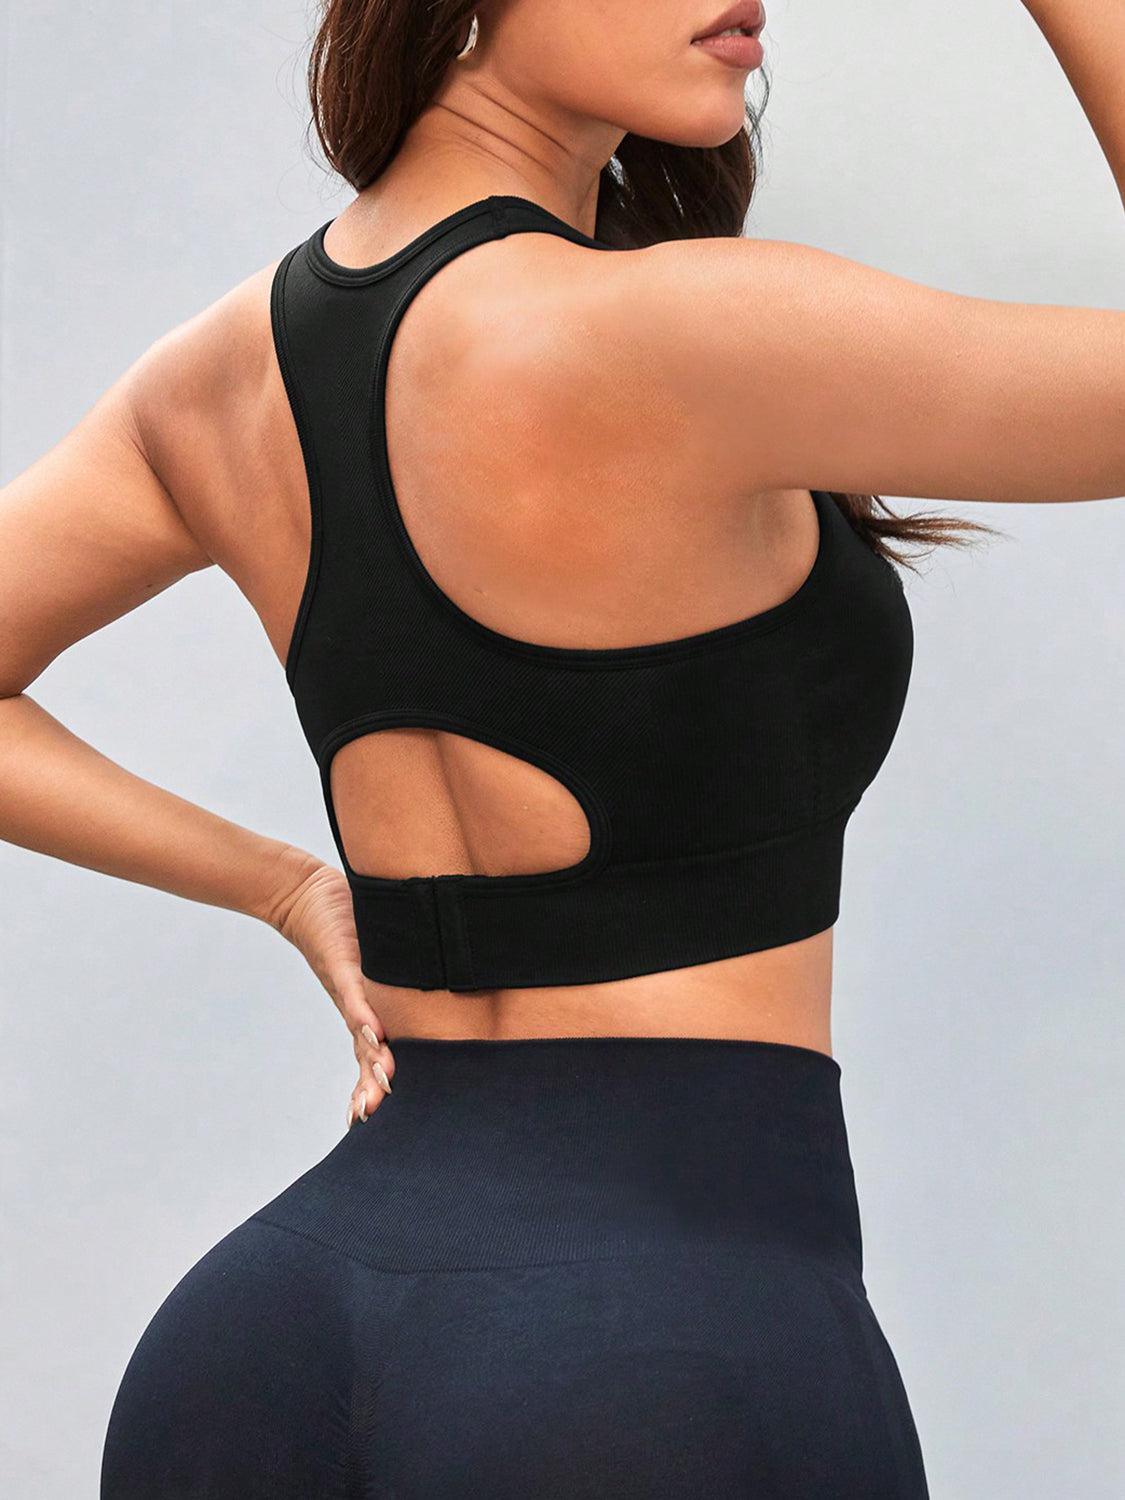 a woman wearing a black sports bra top and black leggings